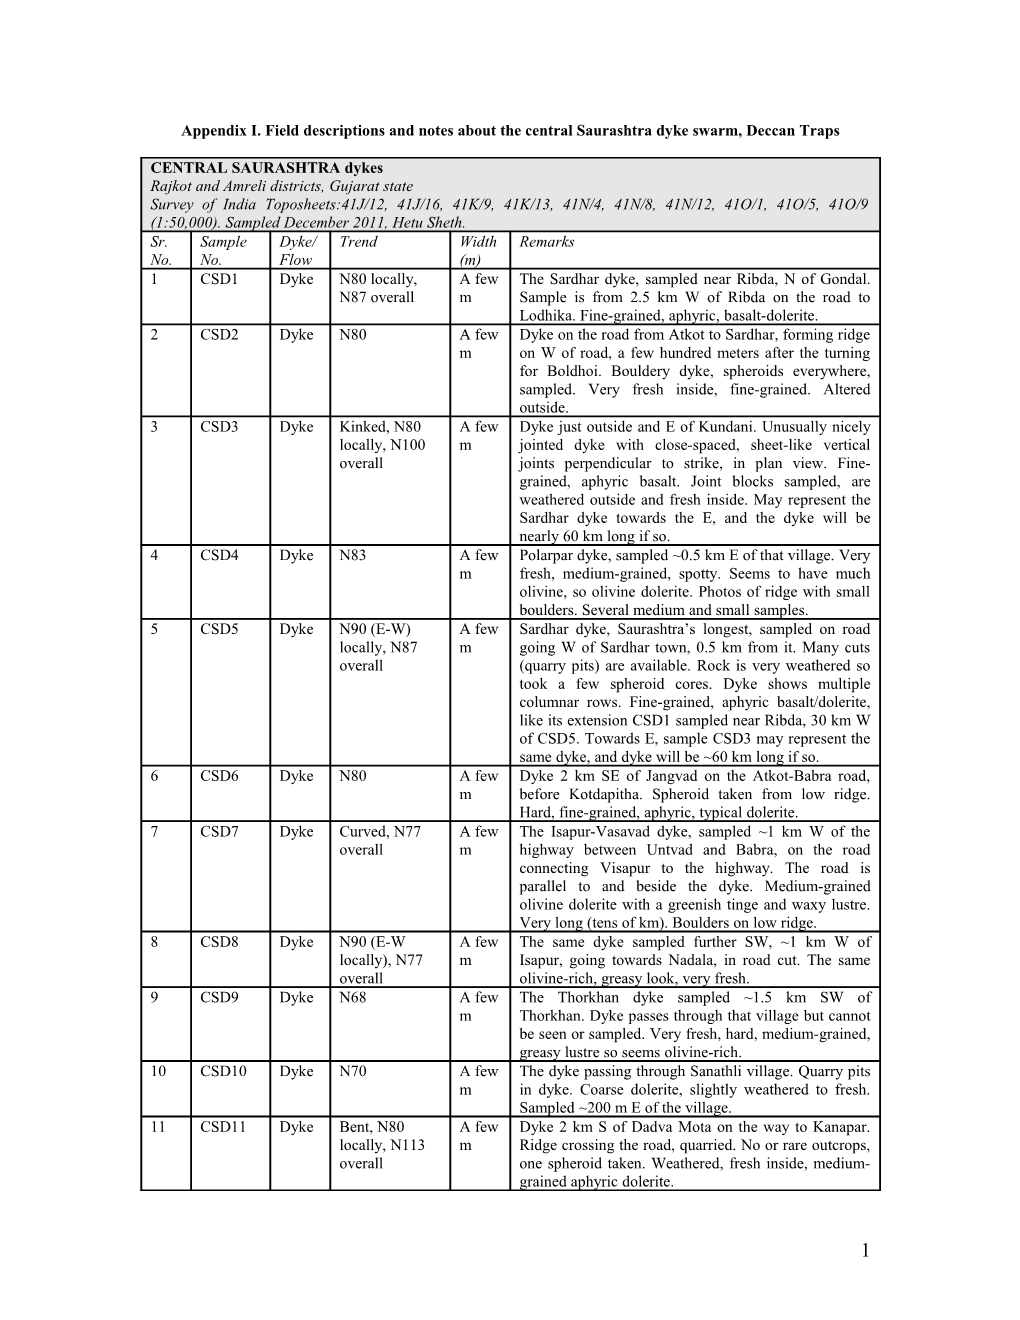 Appendix I. Field Descriptions and Notes About the Central Saurashtra Dyke Swarm, Deccan Traps